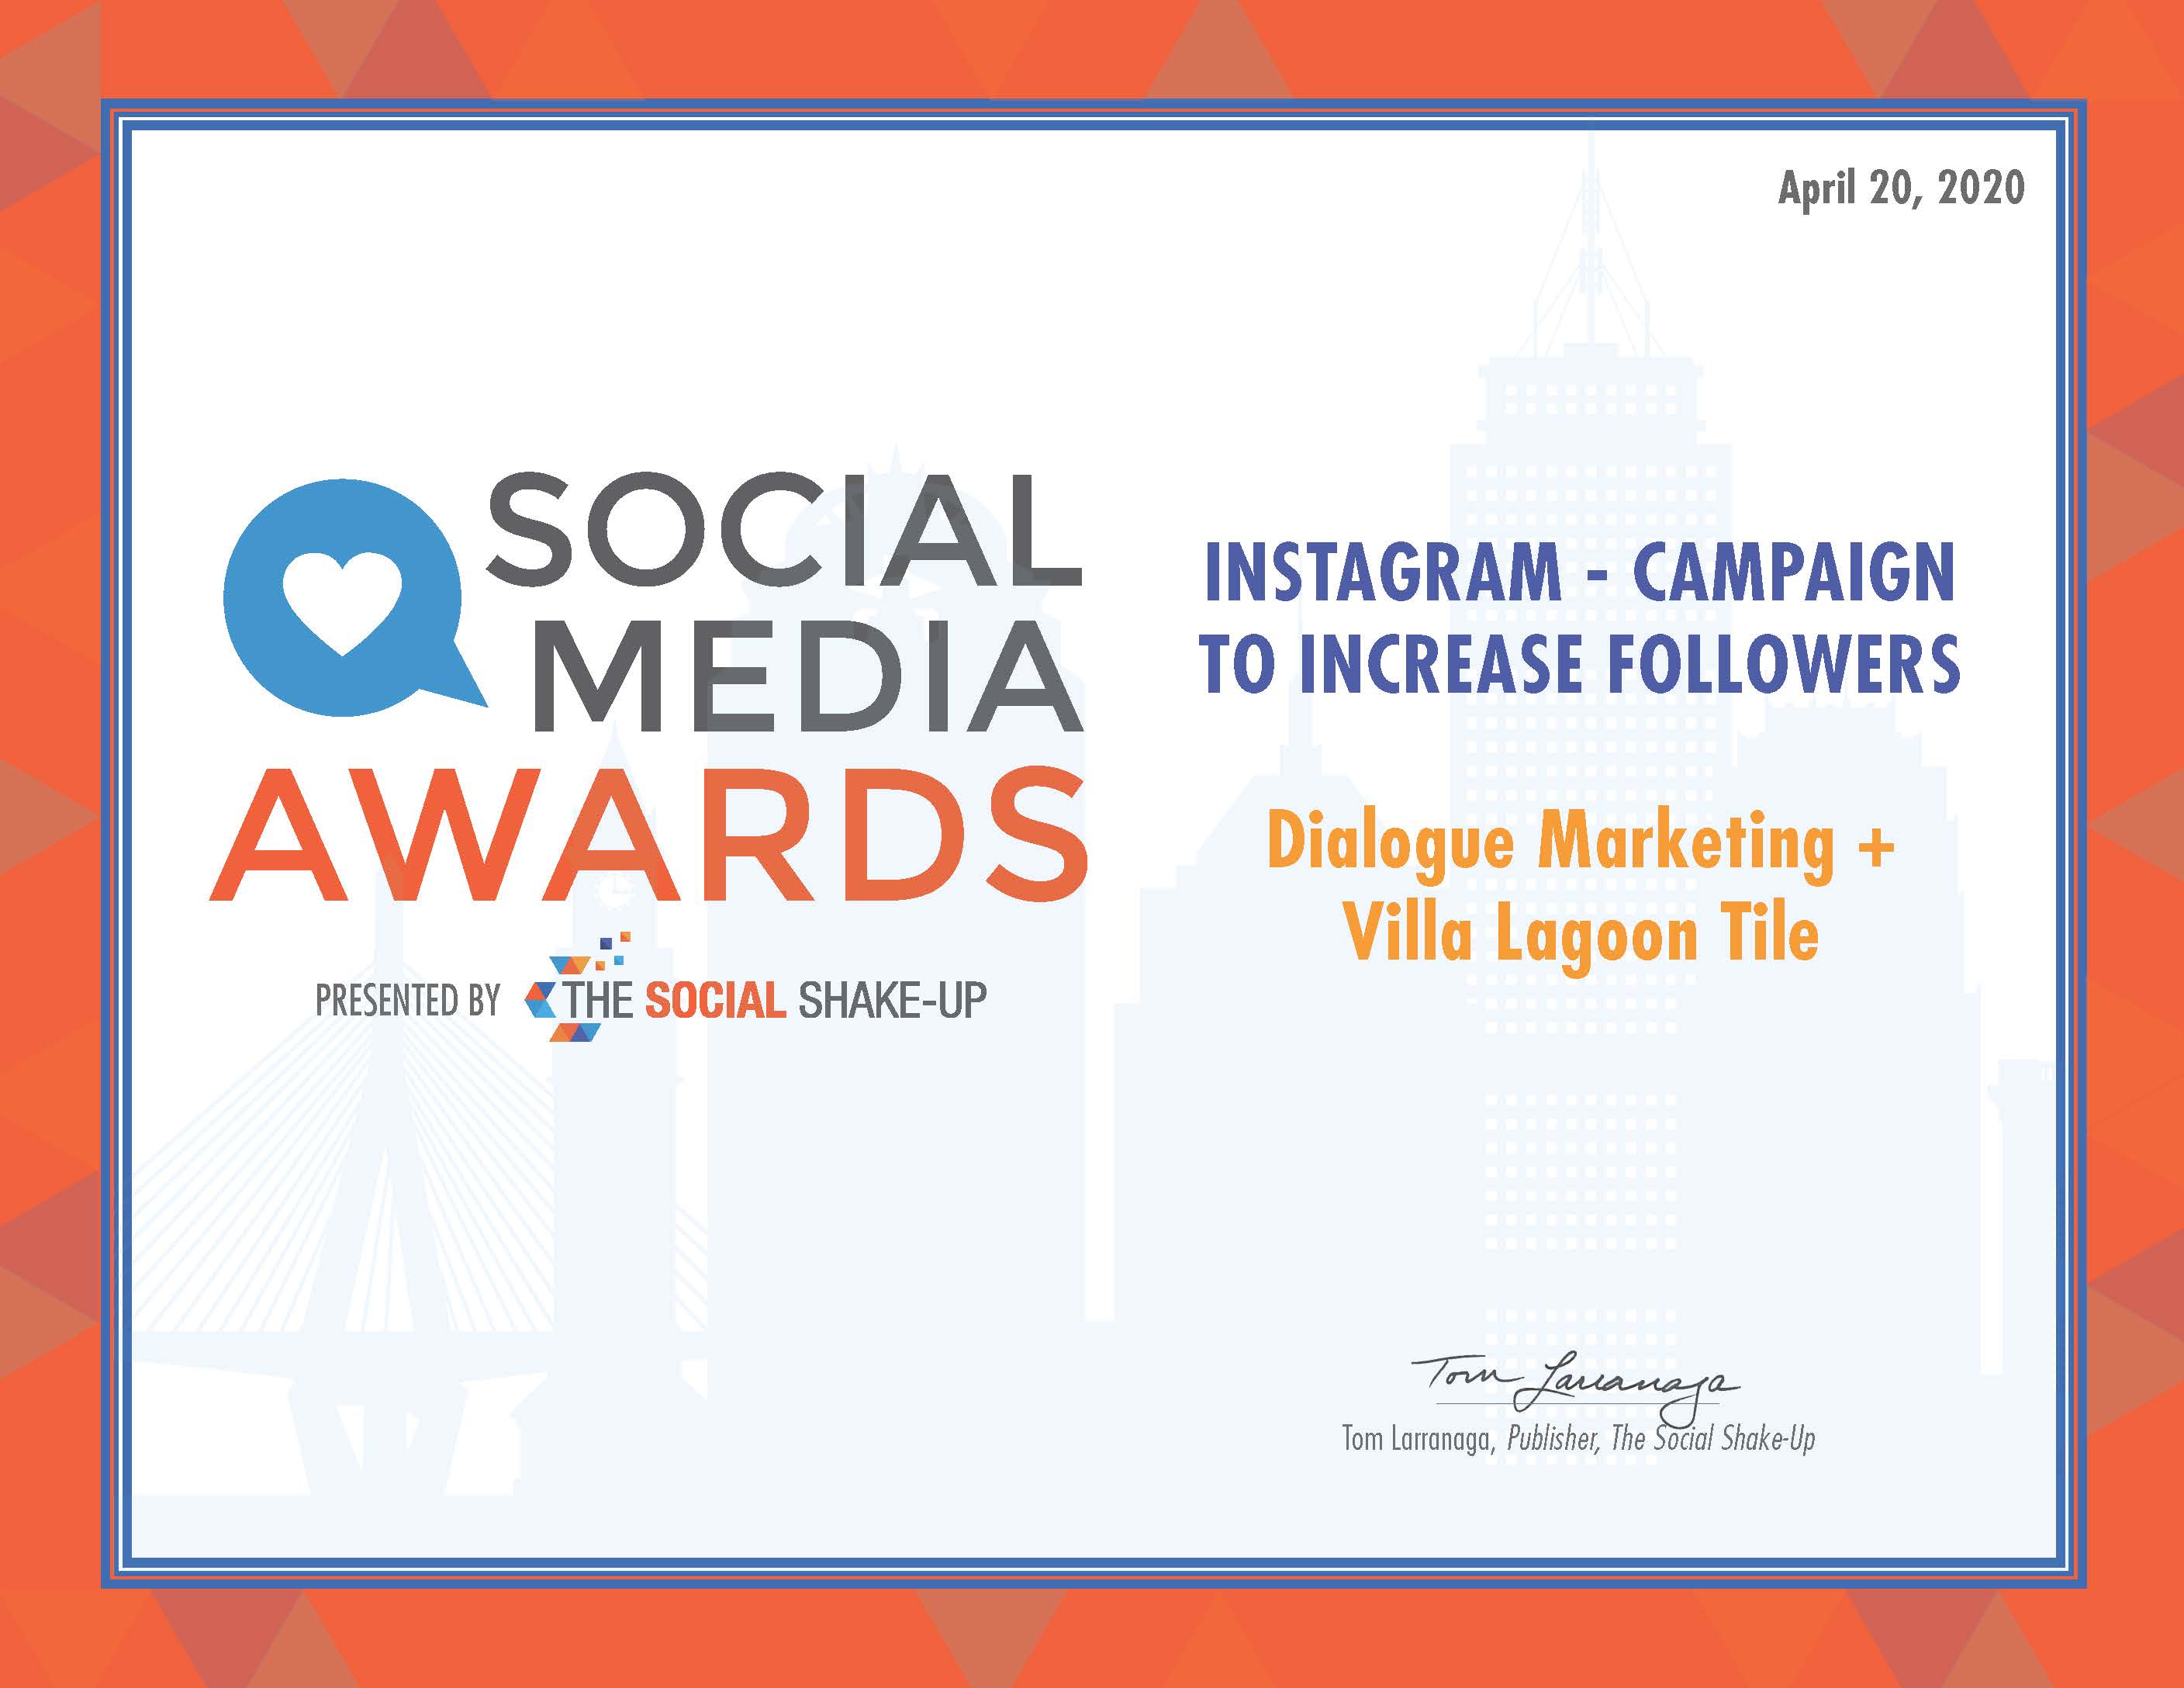 the social shake-up social media awards_instagram-campaign to increase followers_dialogue marketing_villa lagoon tile